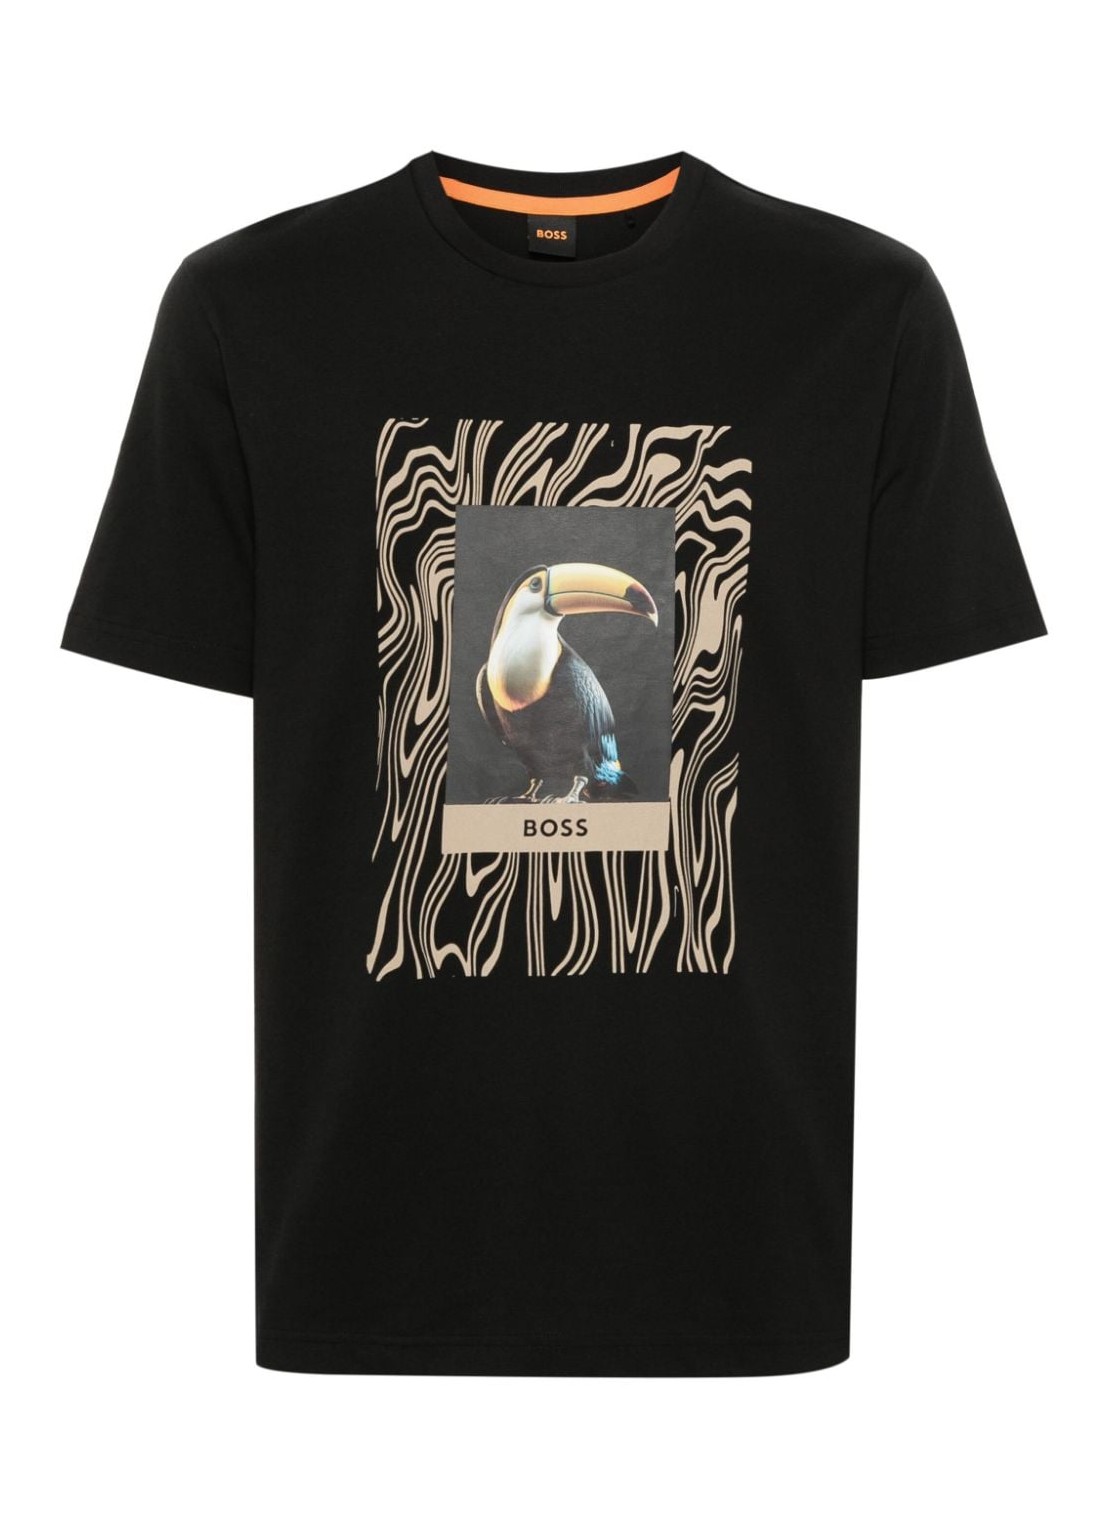 Camiseta boss t-shirt mante_tucan - 50516012 002 talla L
 